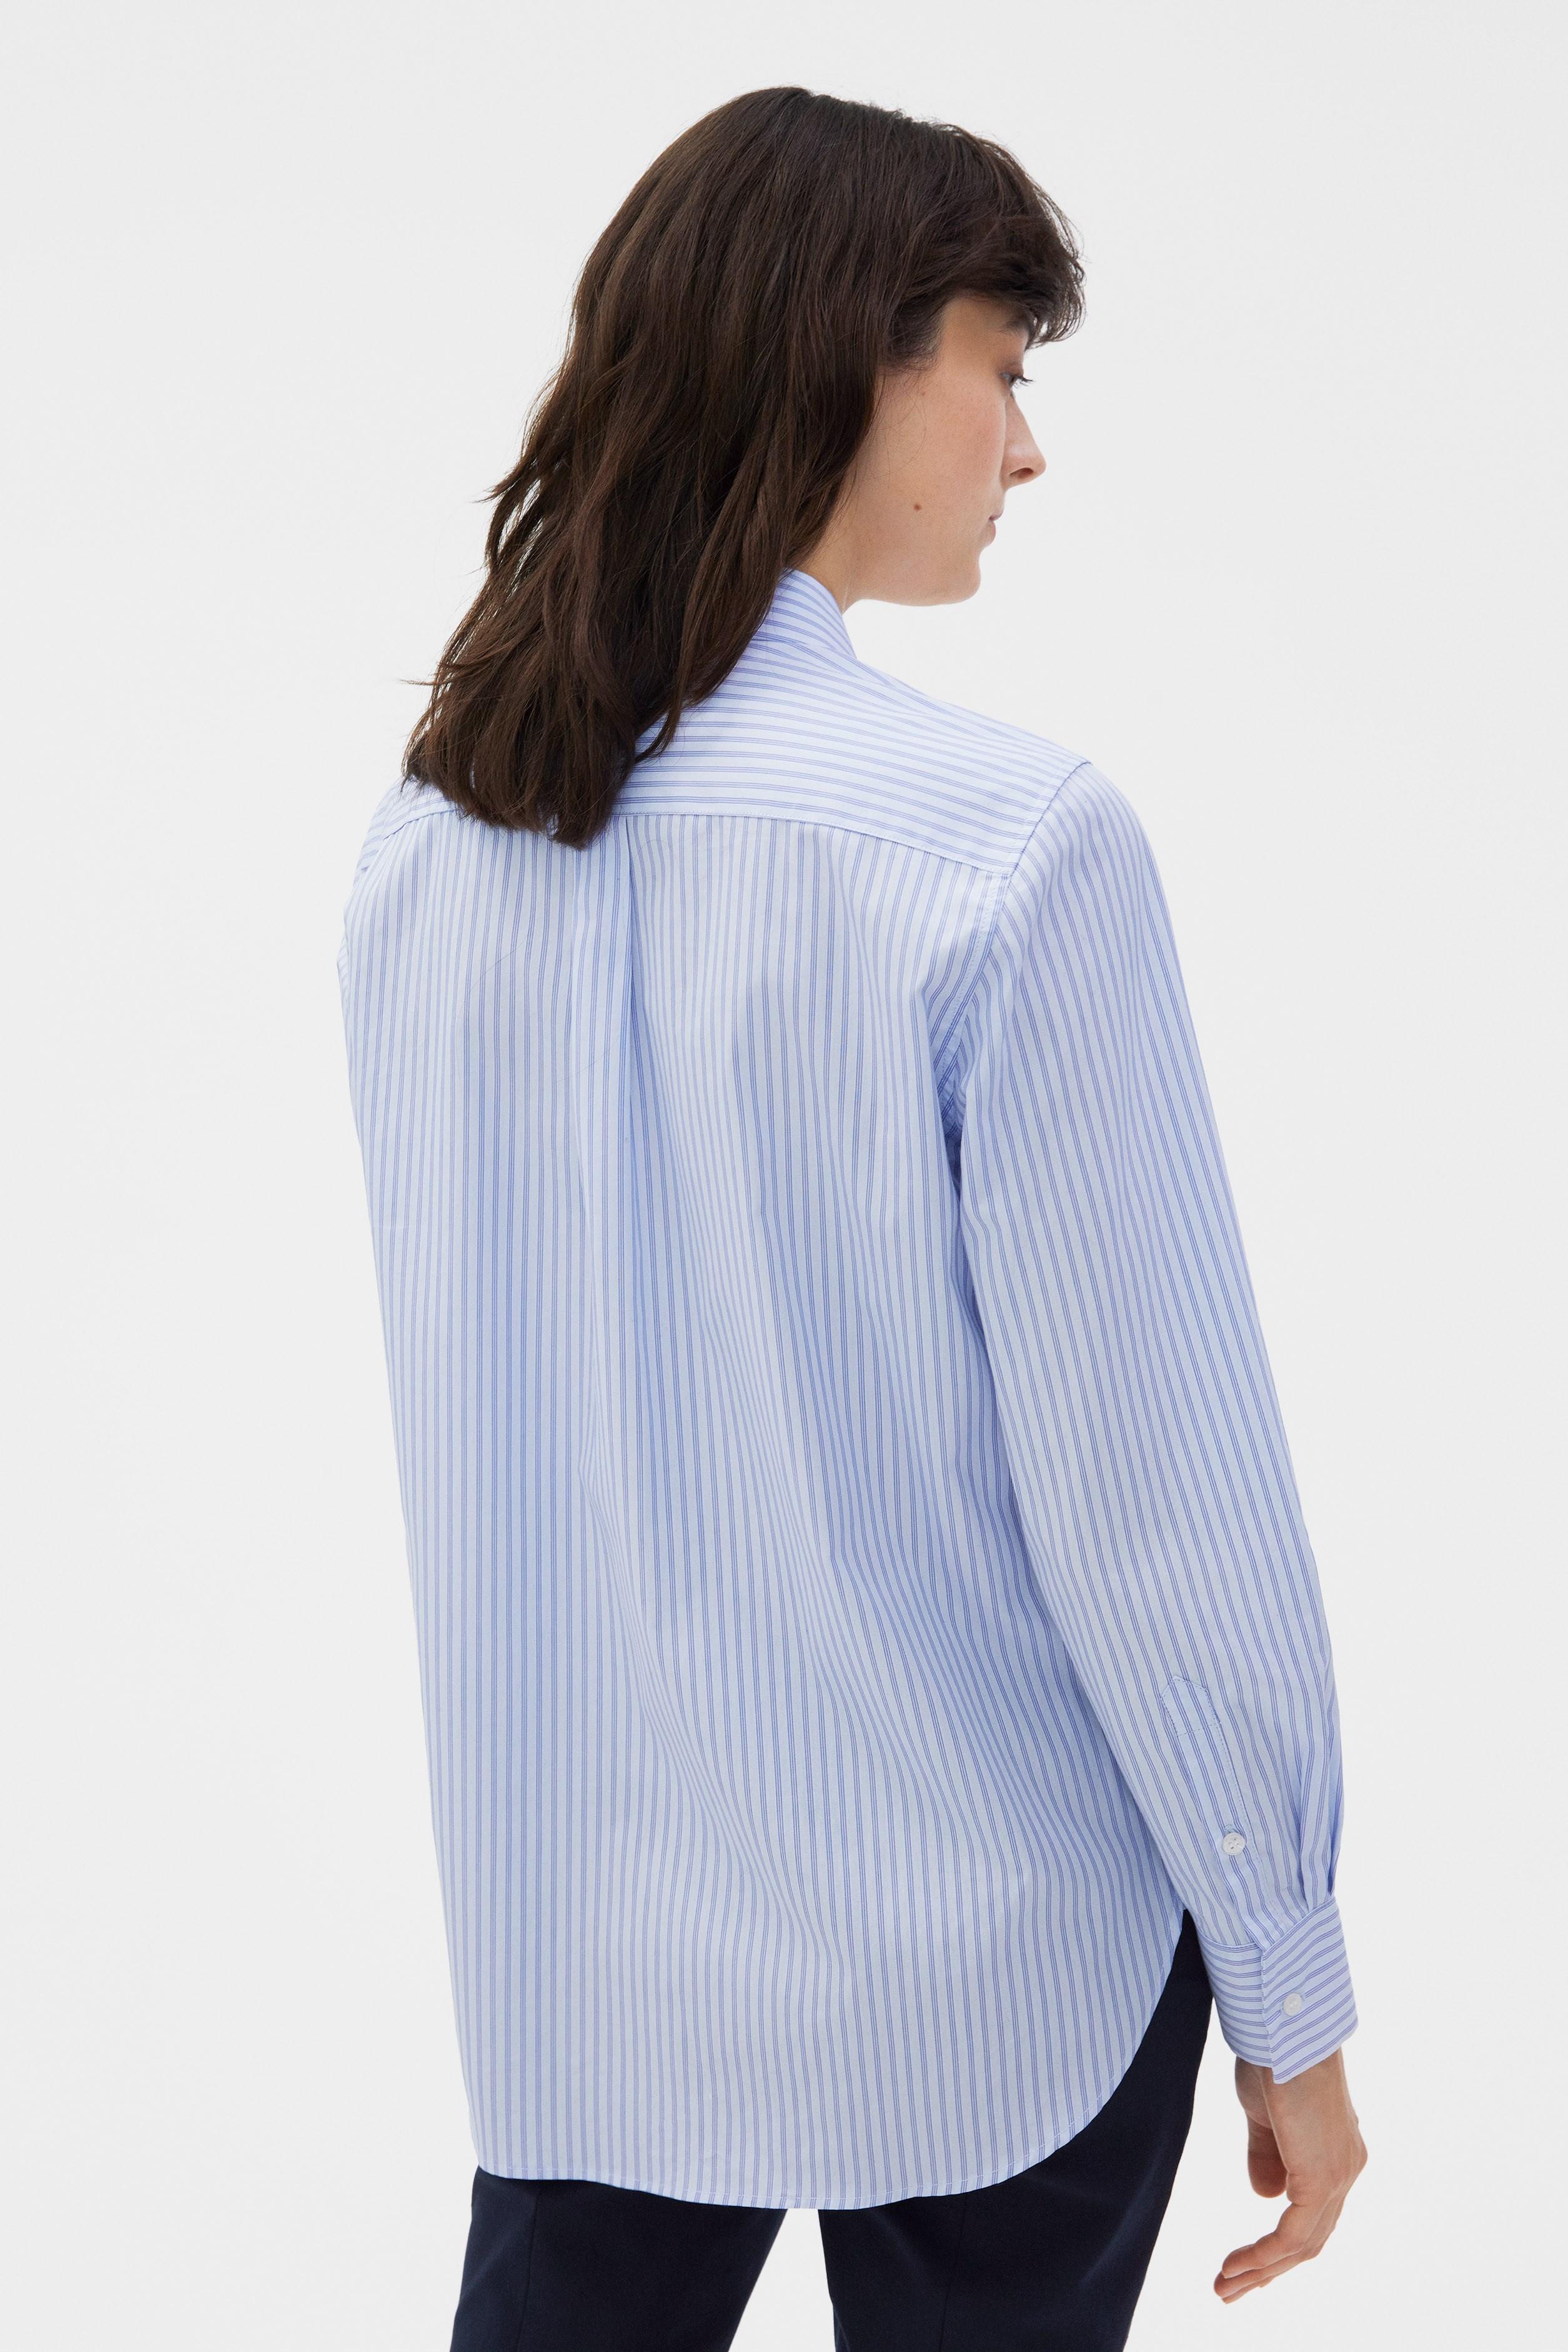 Filippa K Jane Striped Shirt in Blue | Lyst UK